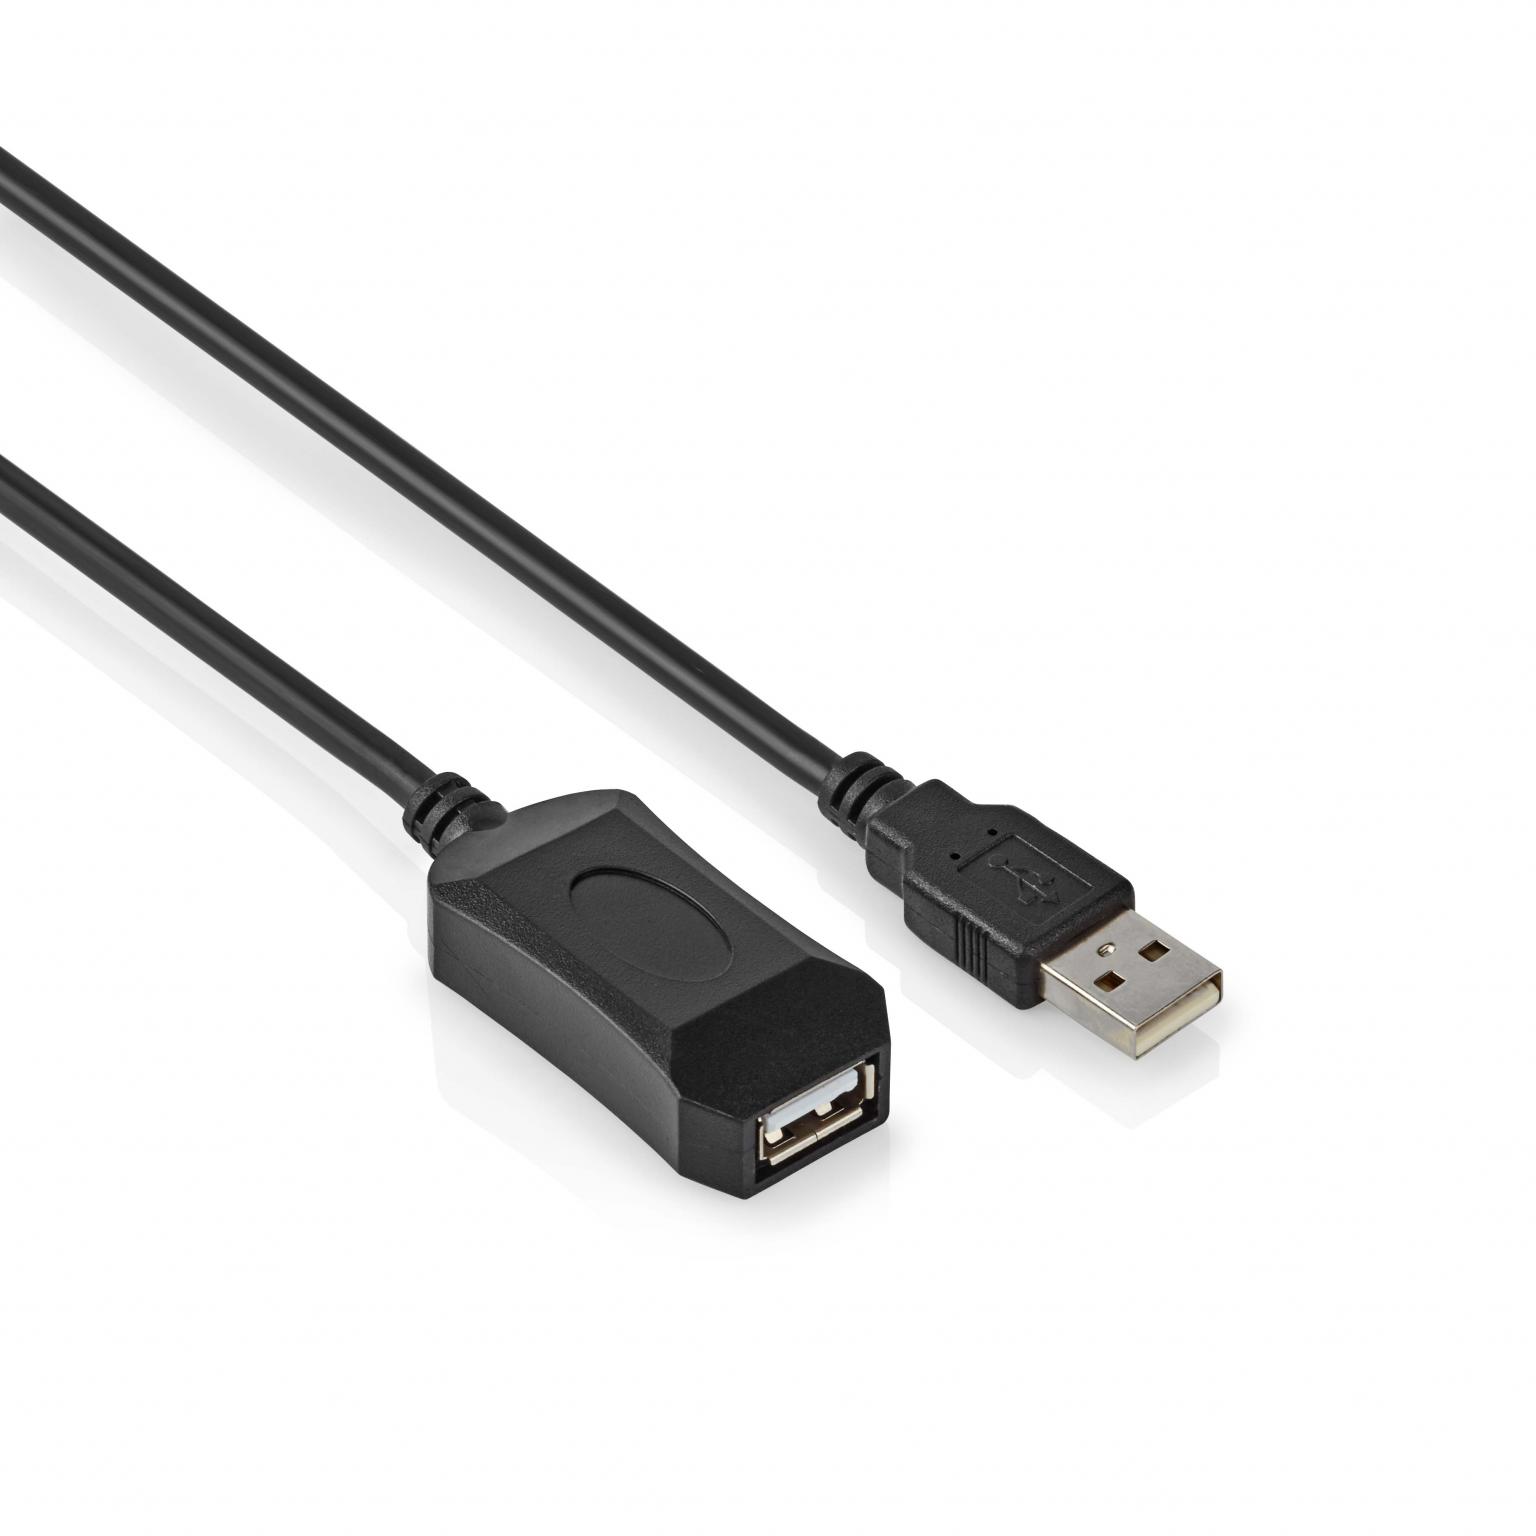 Actieve USB-Kabel - 2.0 - High Speed, Aansluiting 1: USB A male, Aansluiting USB A Lengte: 5 meter.